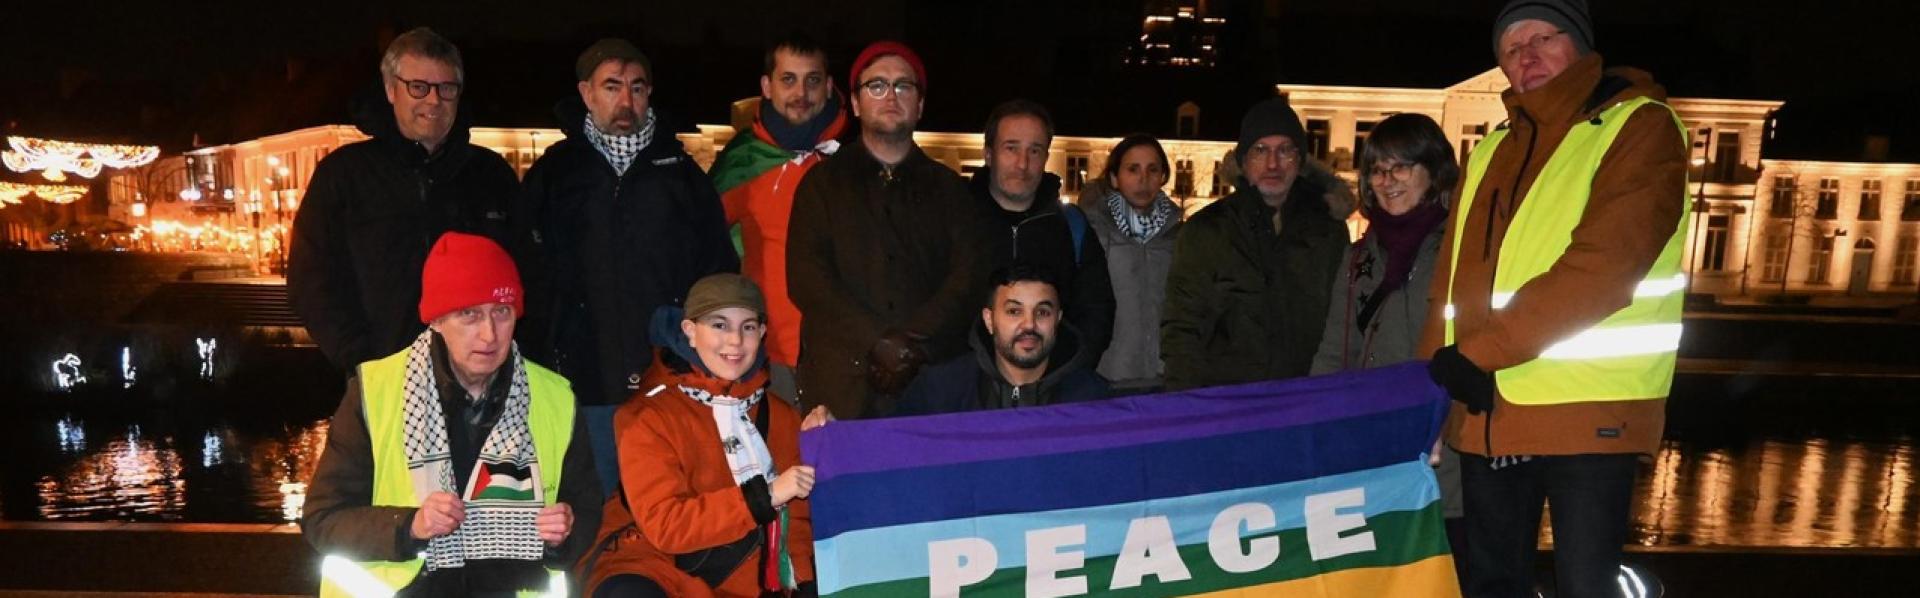 Kortrijk stille wake voor vrede in Palestina en Israel